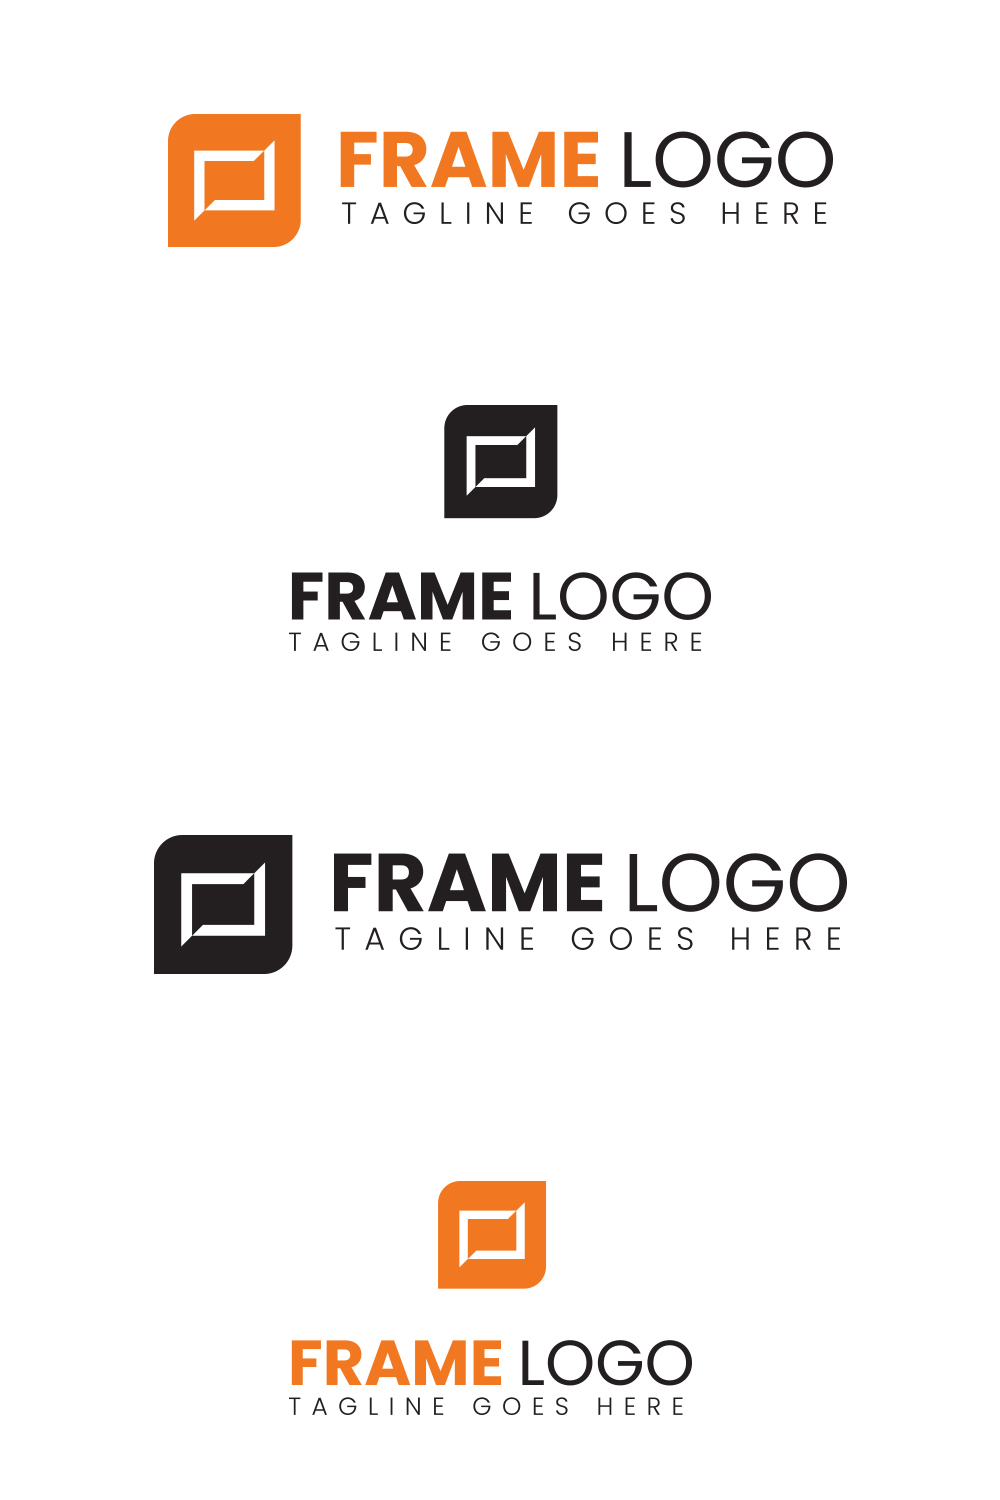 Frame Logo pinterest preview image.